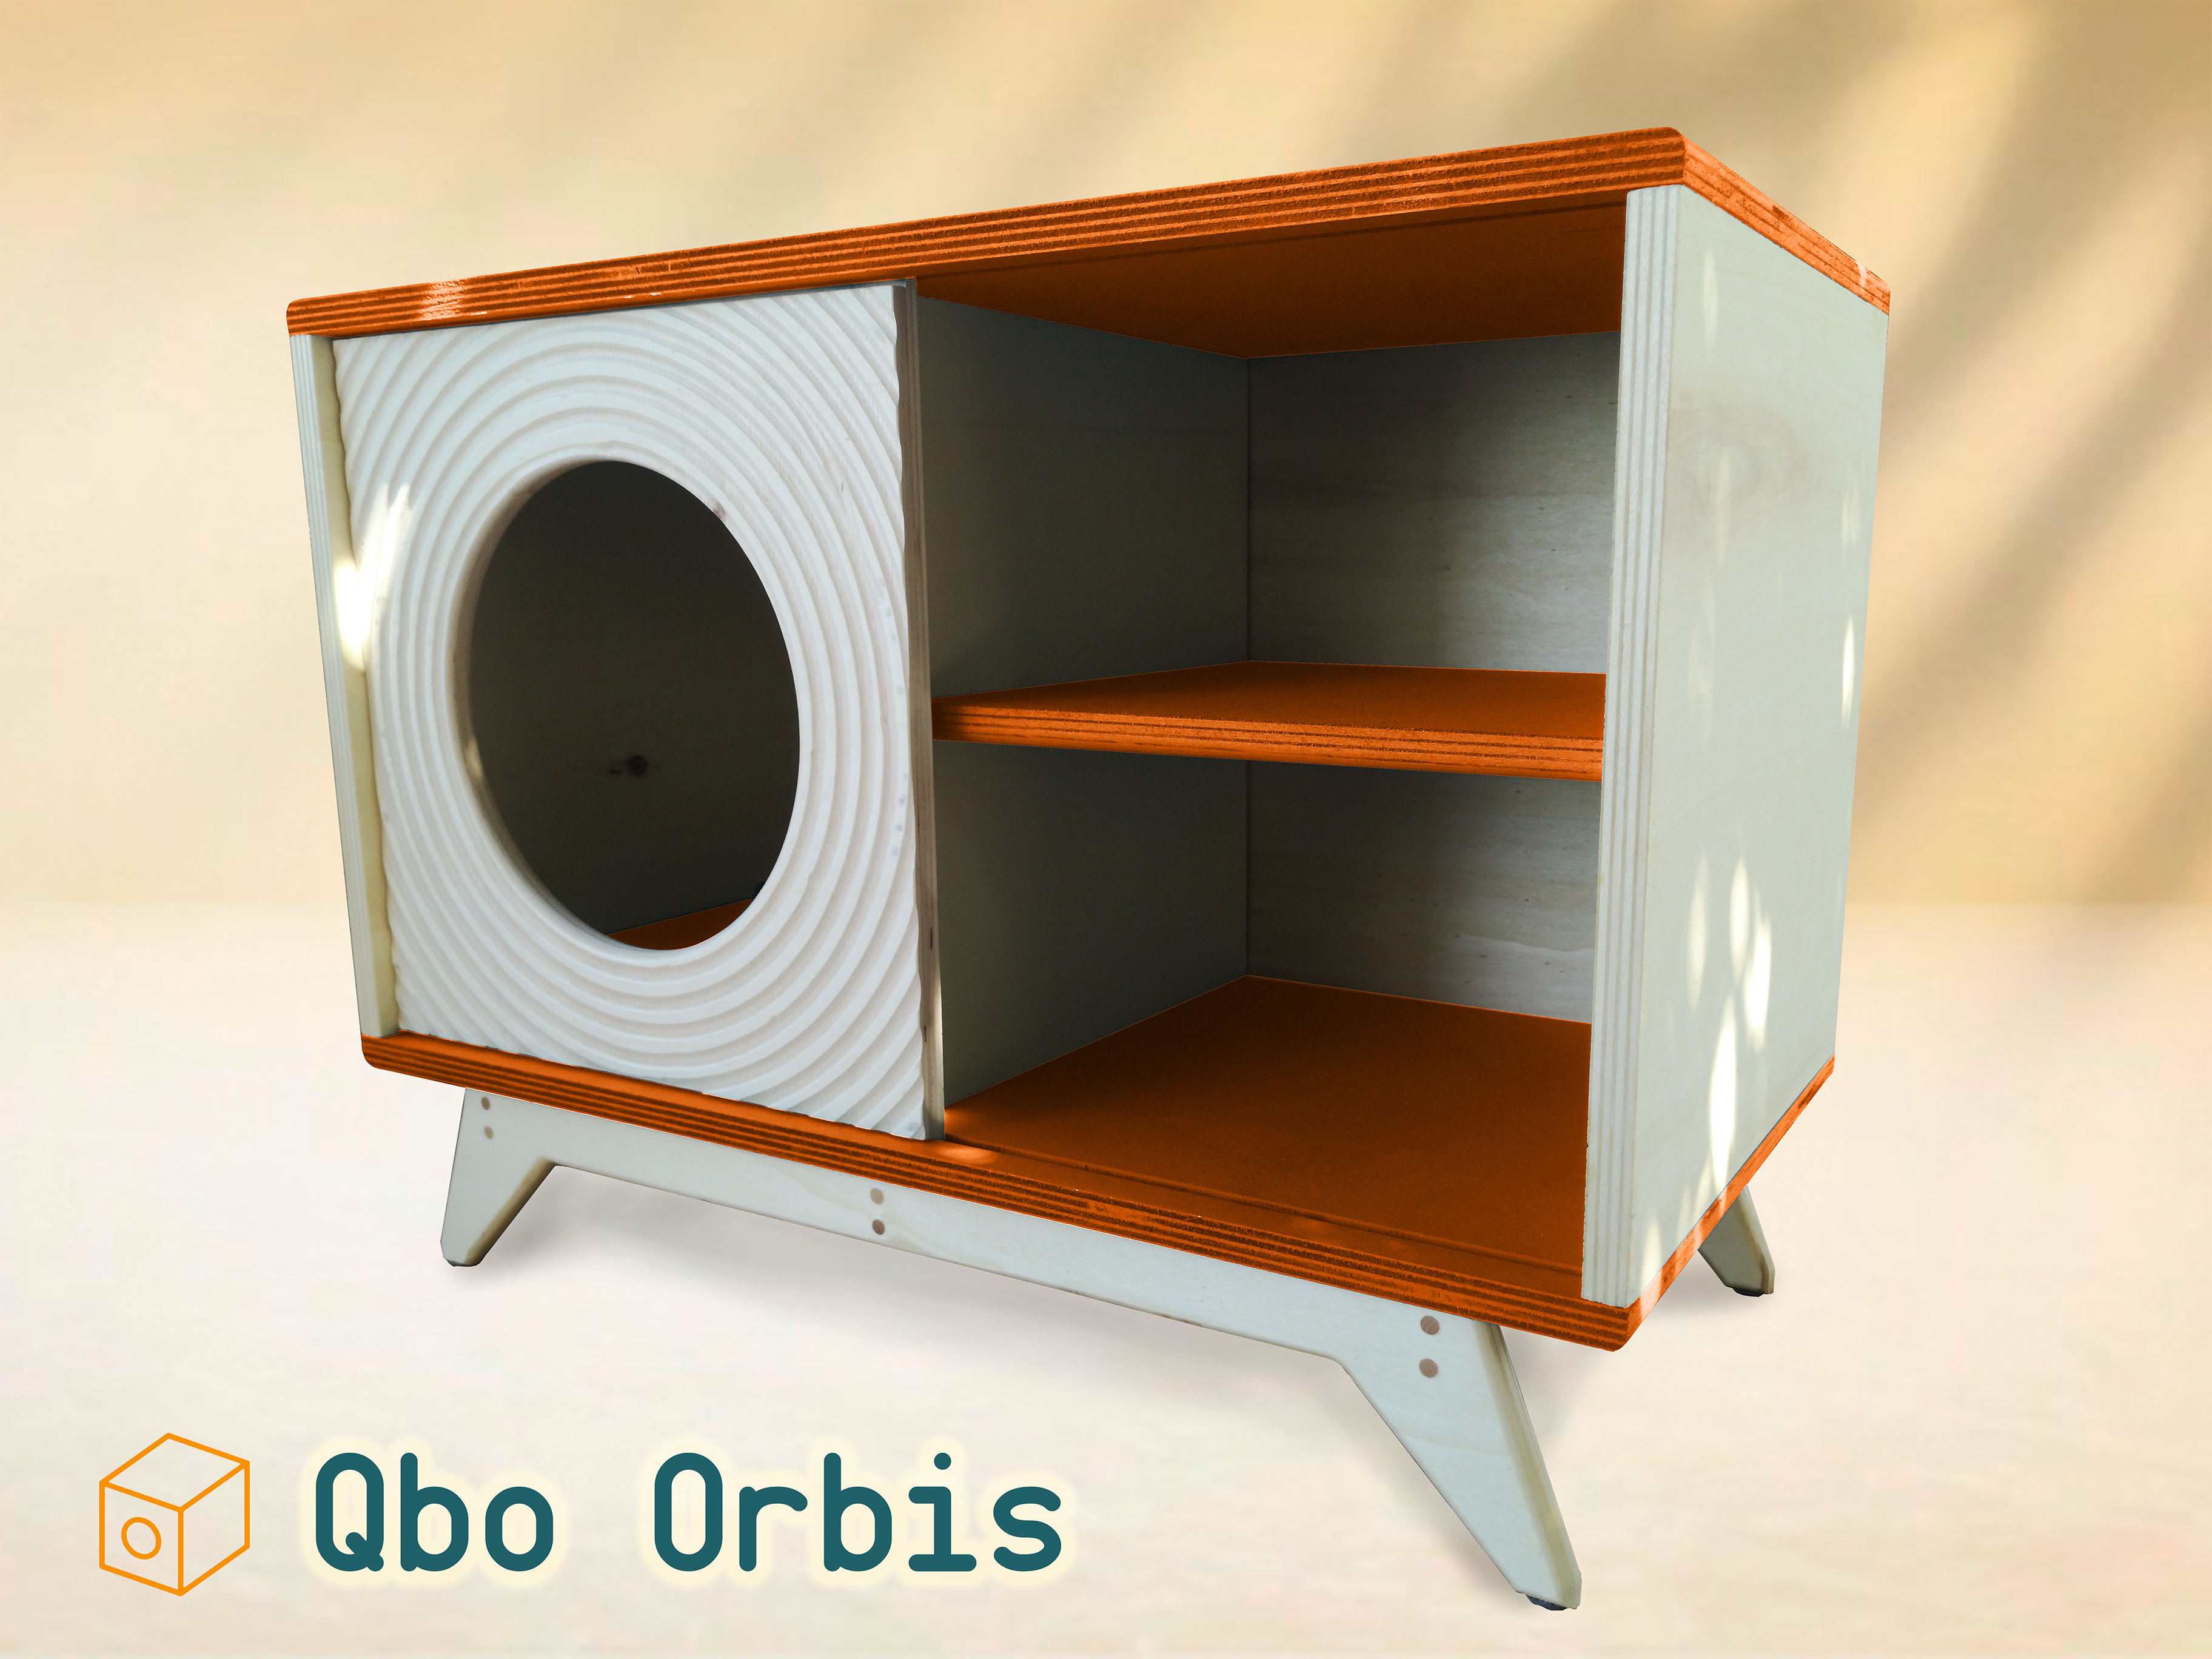 Qbo Orbis - Tropical Orange - Qbo Pets